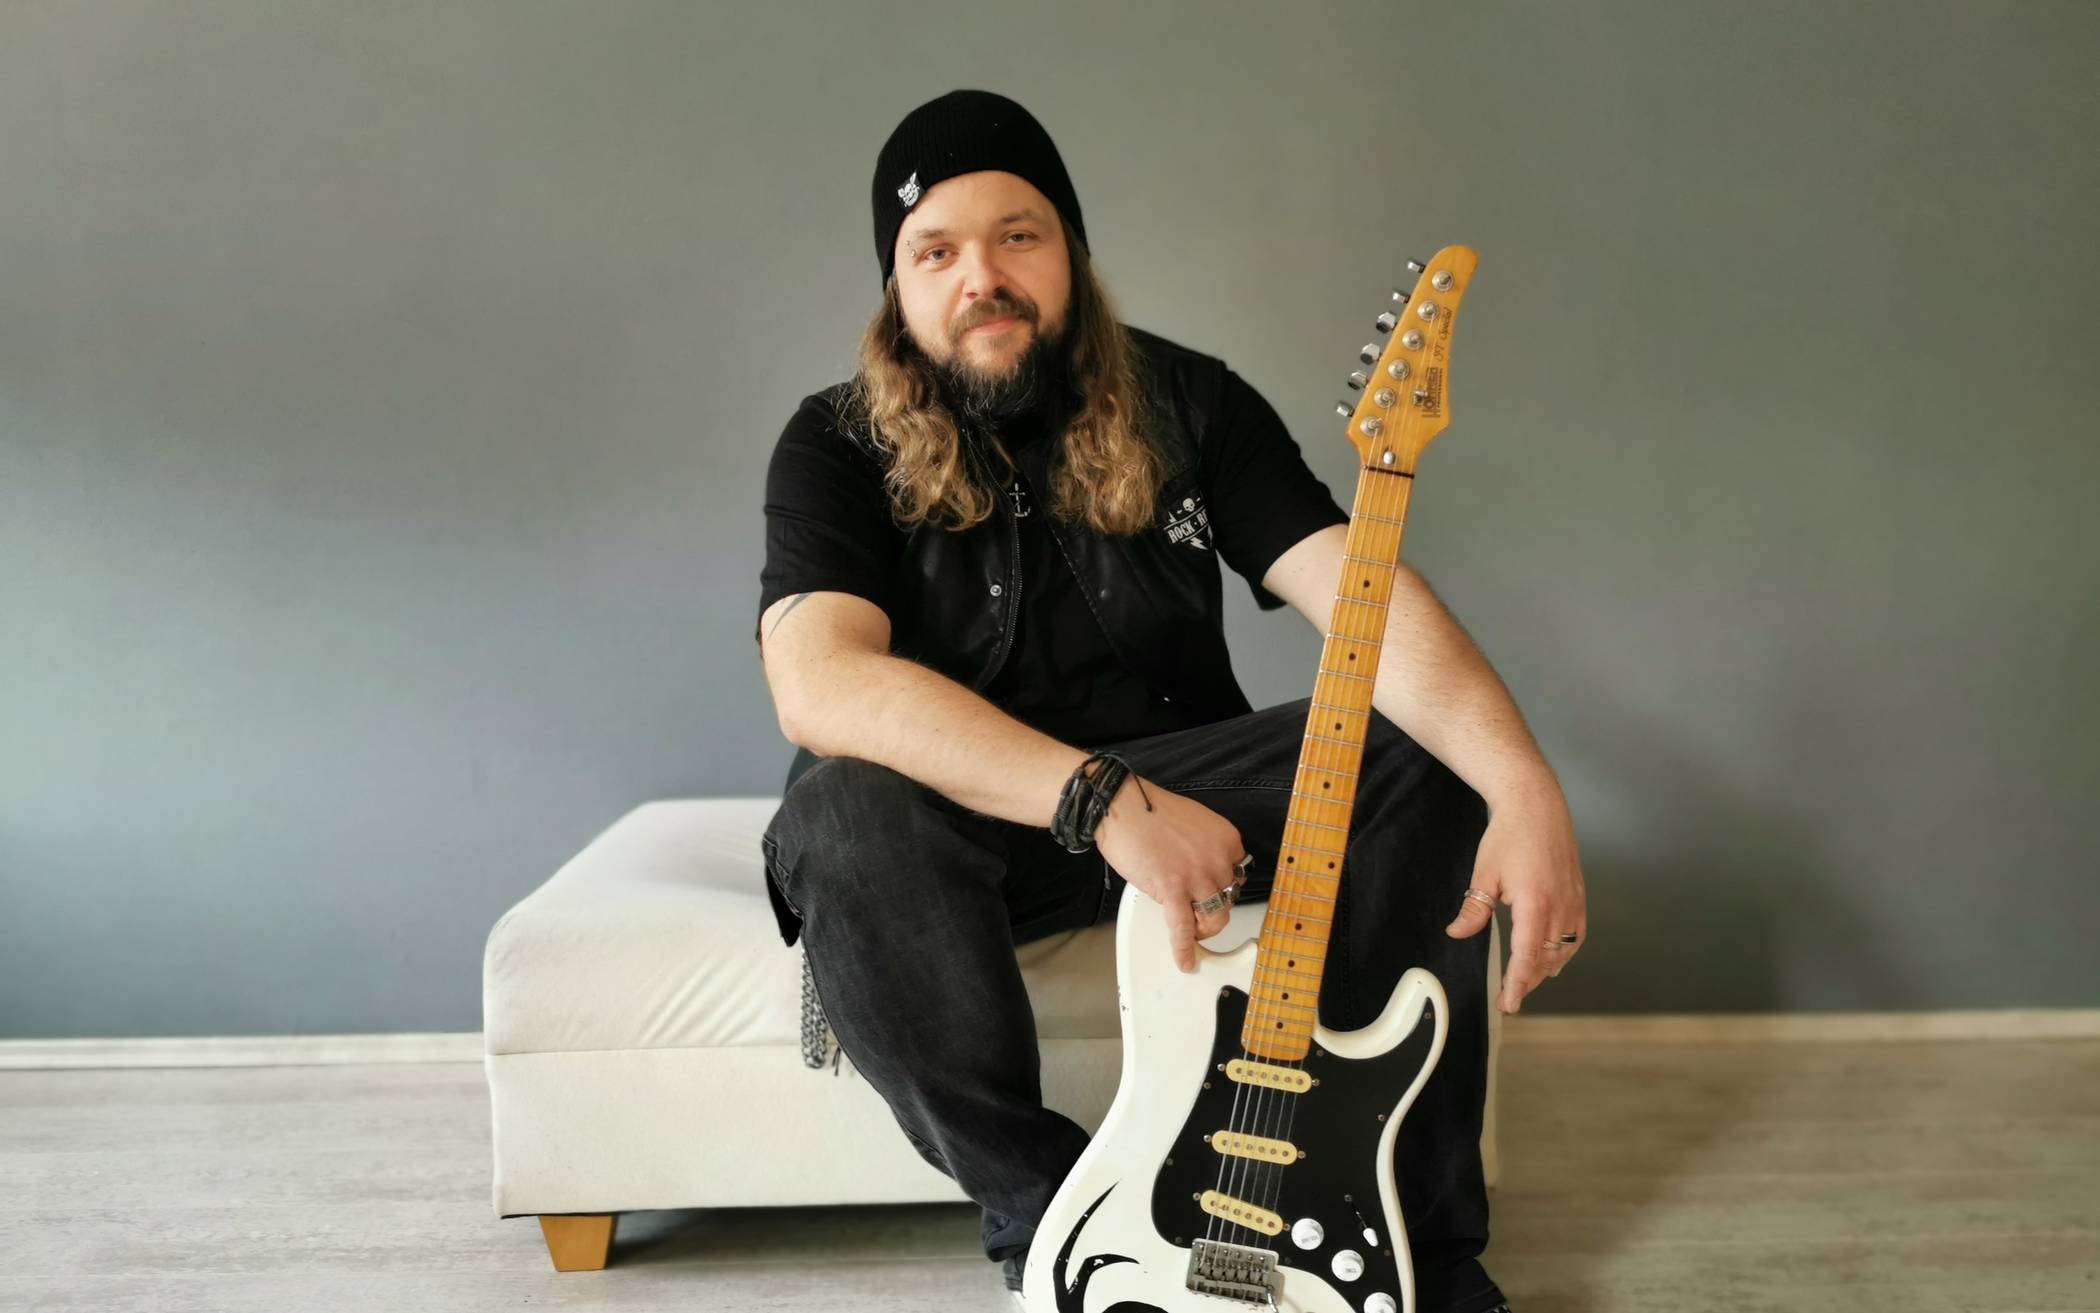  Andreas Denz, Gitarrist bei der Power-Metal Band Lyra's Legacy.  